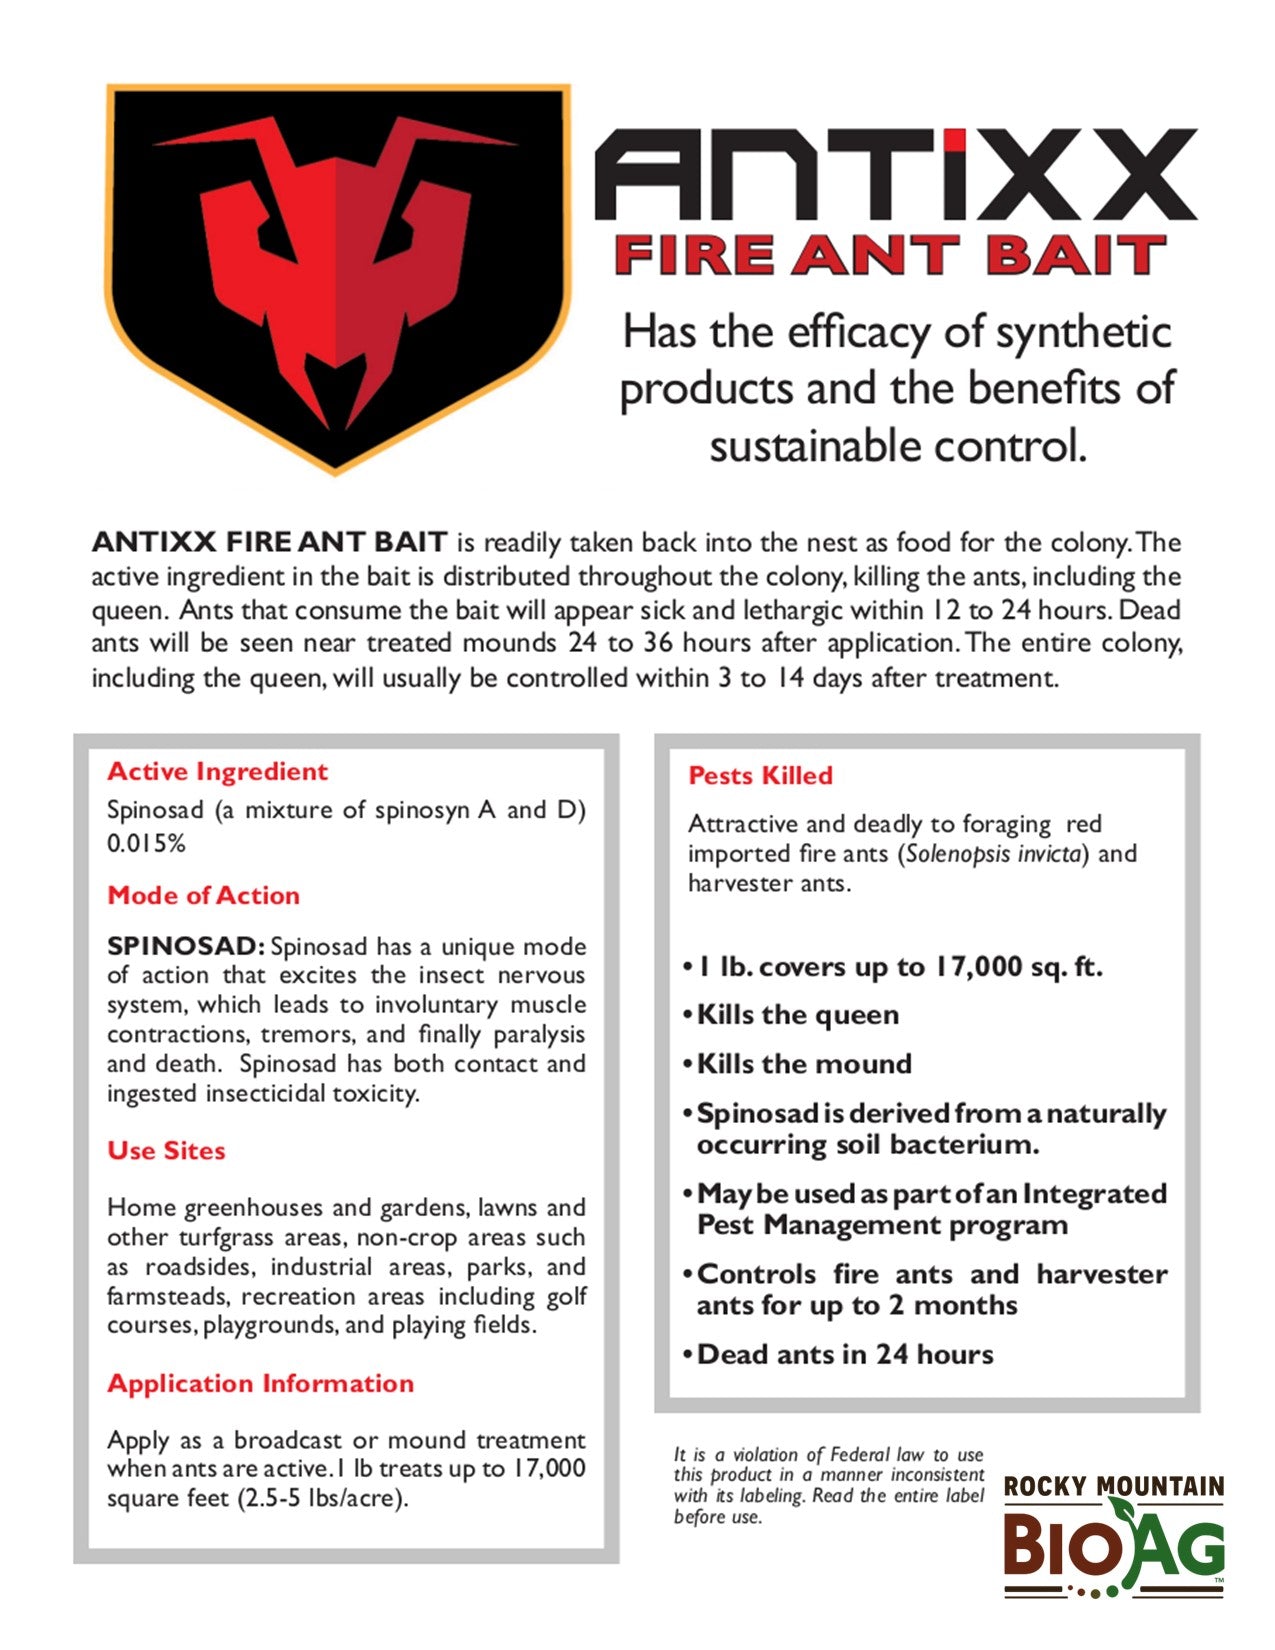 Antixx Fire Ant Bait information sheet